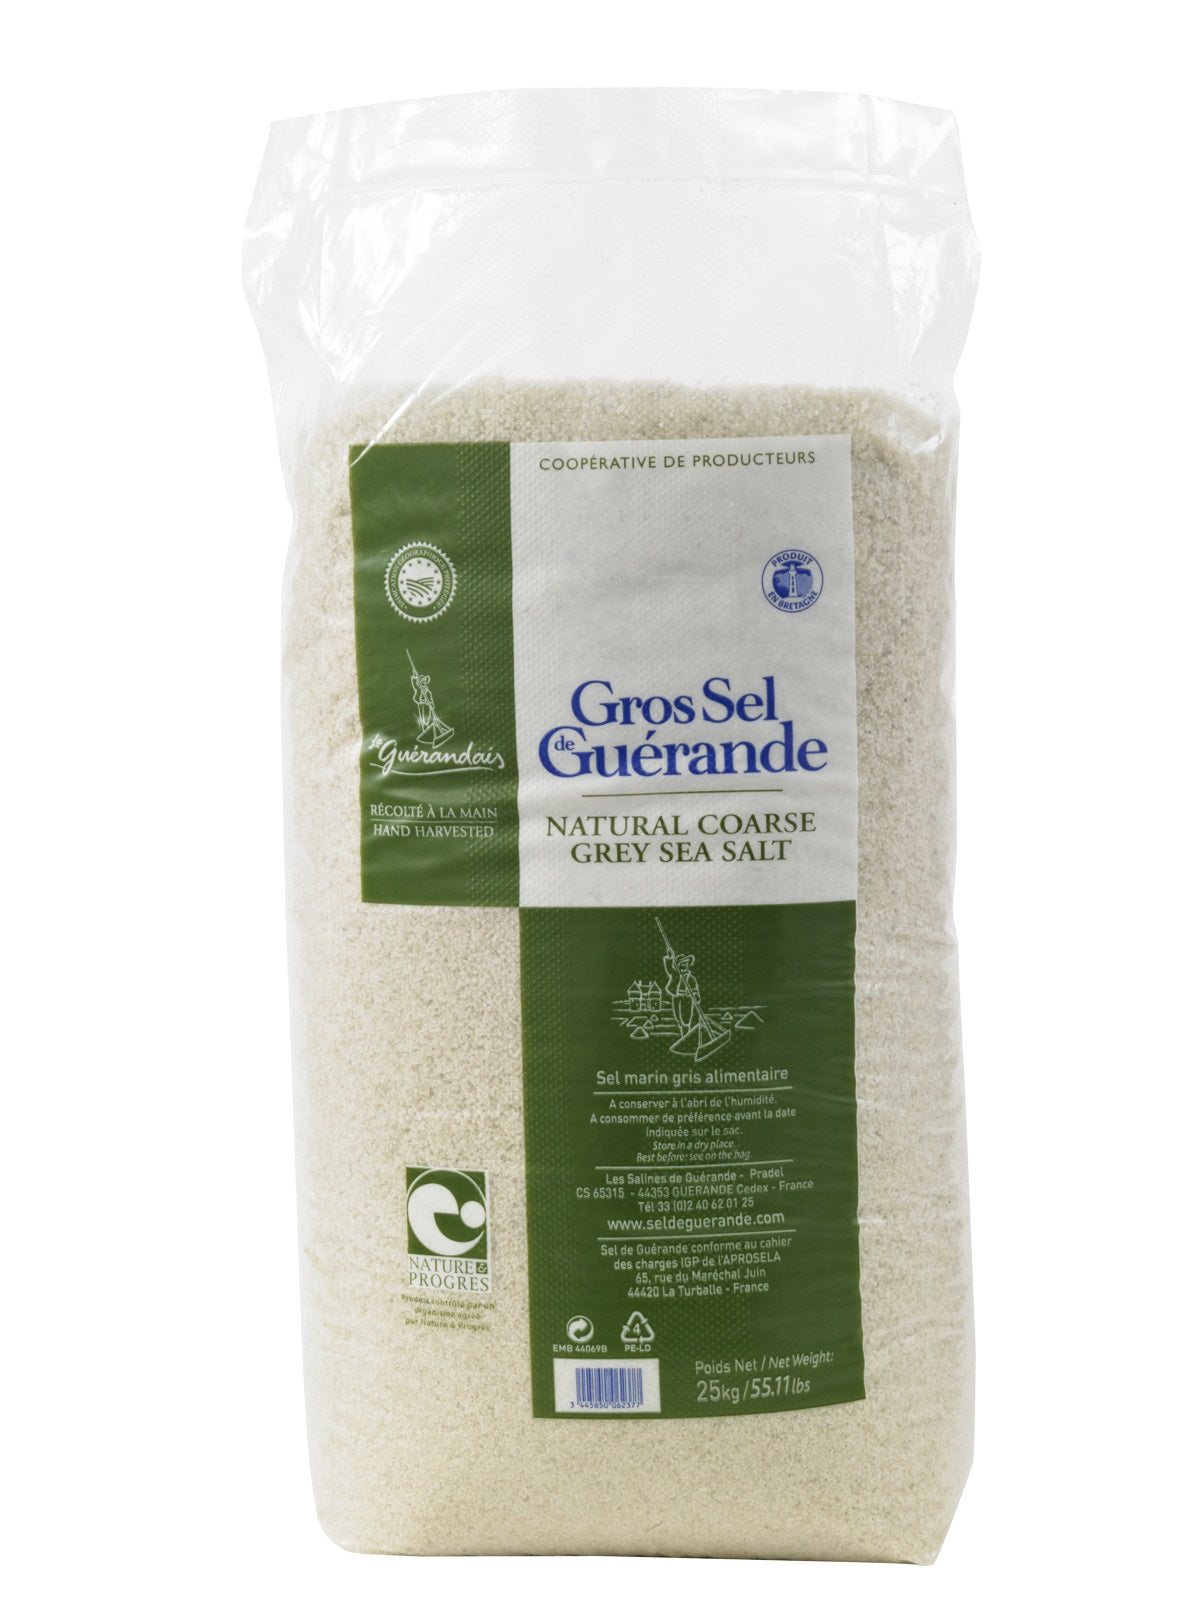 Unrefined Le Guerande Celtic Sea Salt - Grey Coarse 25kg - certified by Nature & Progress